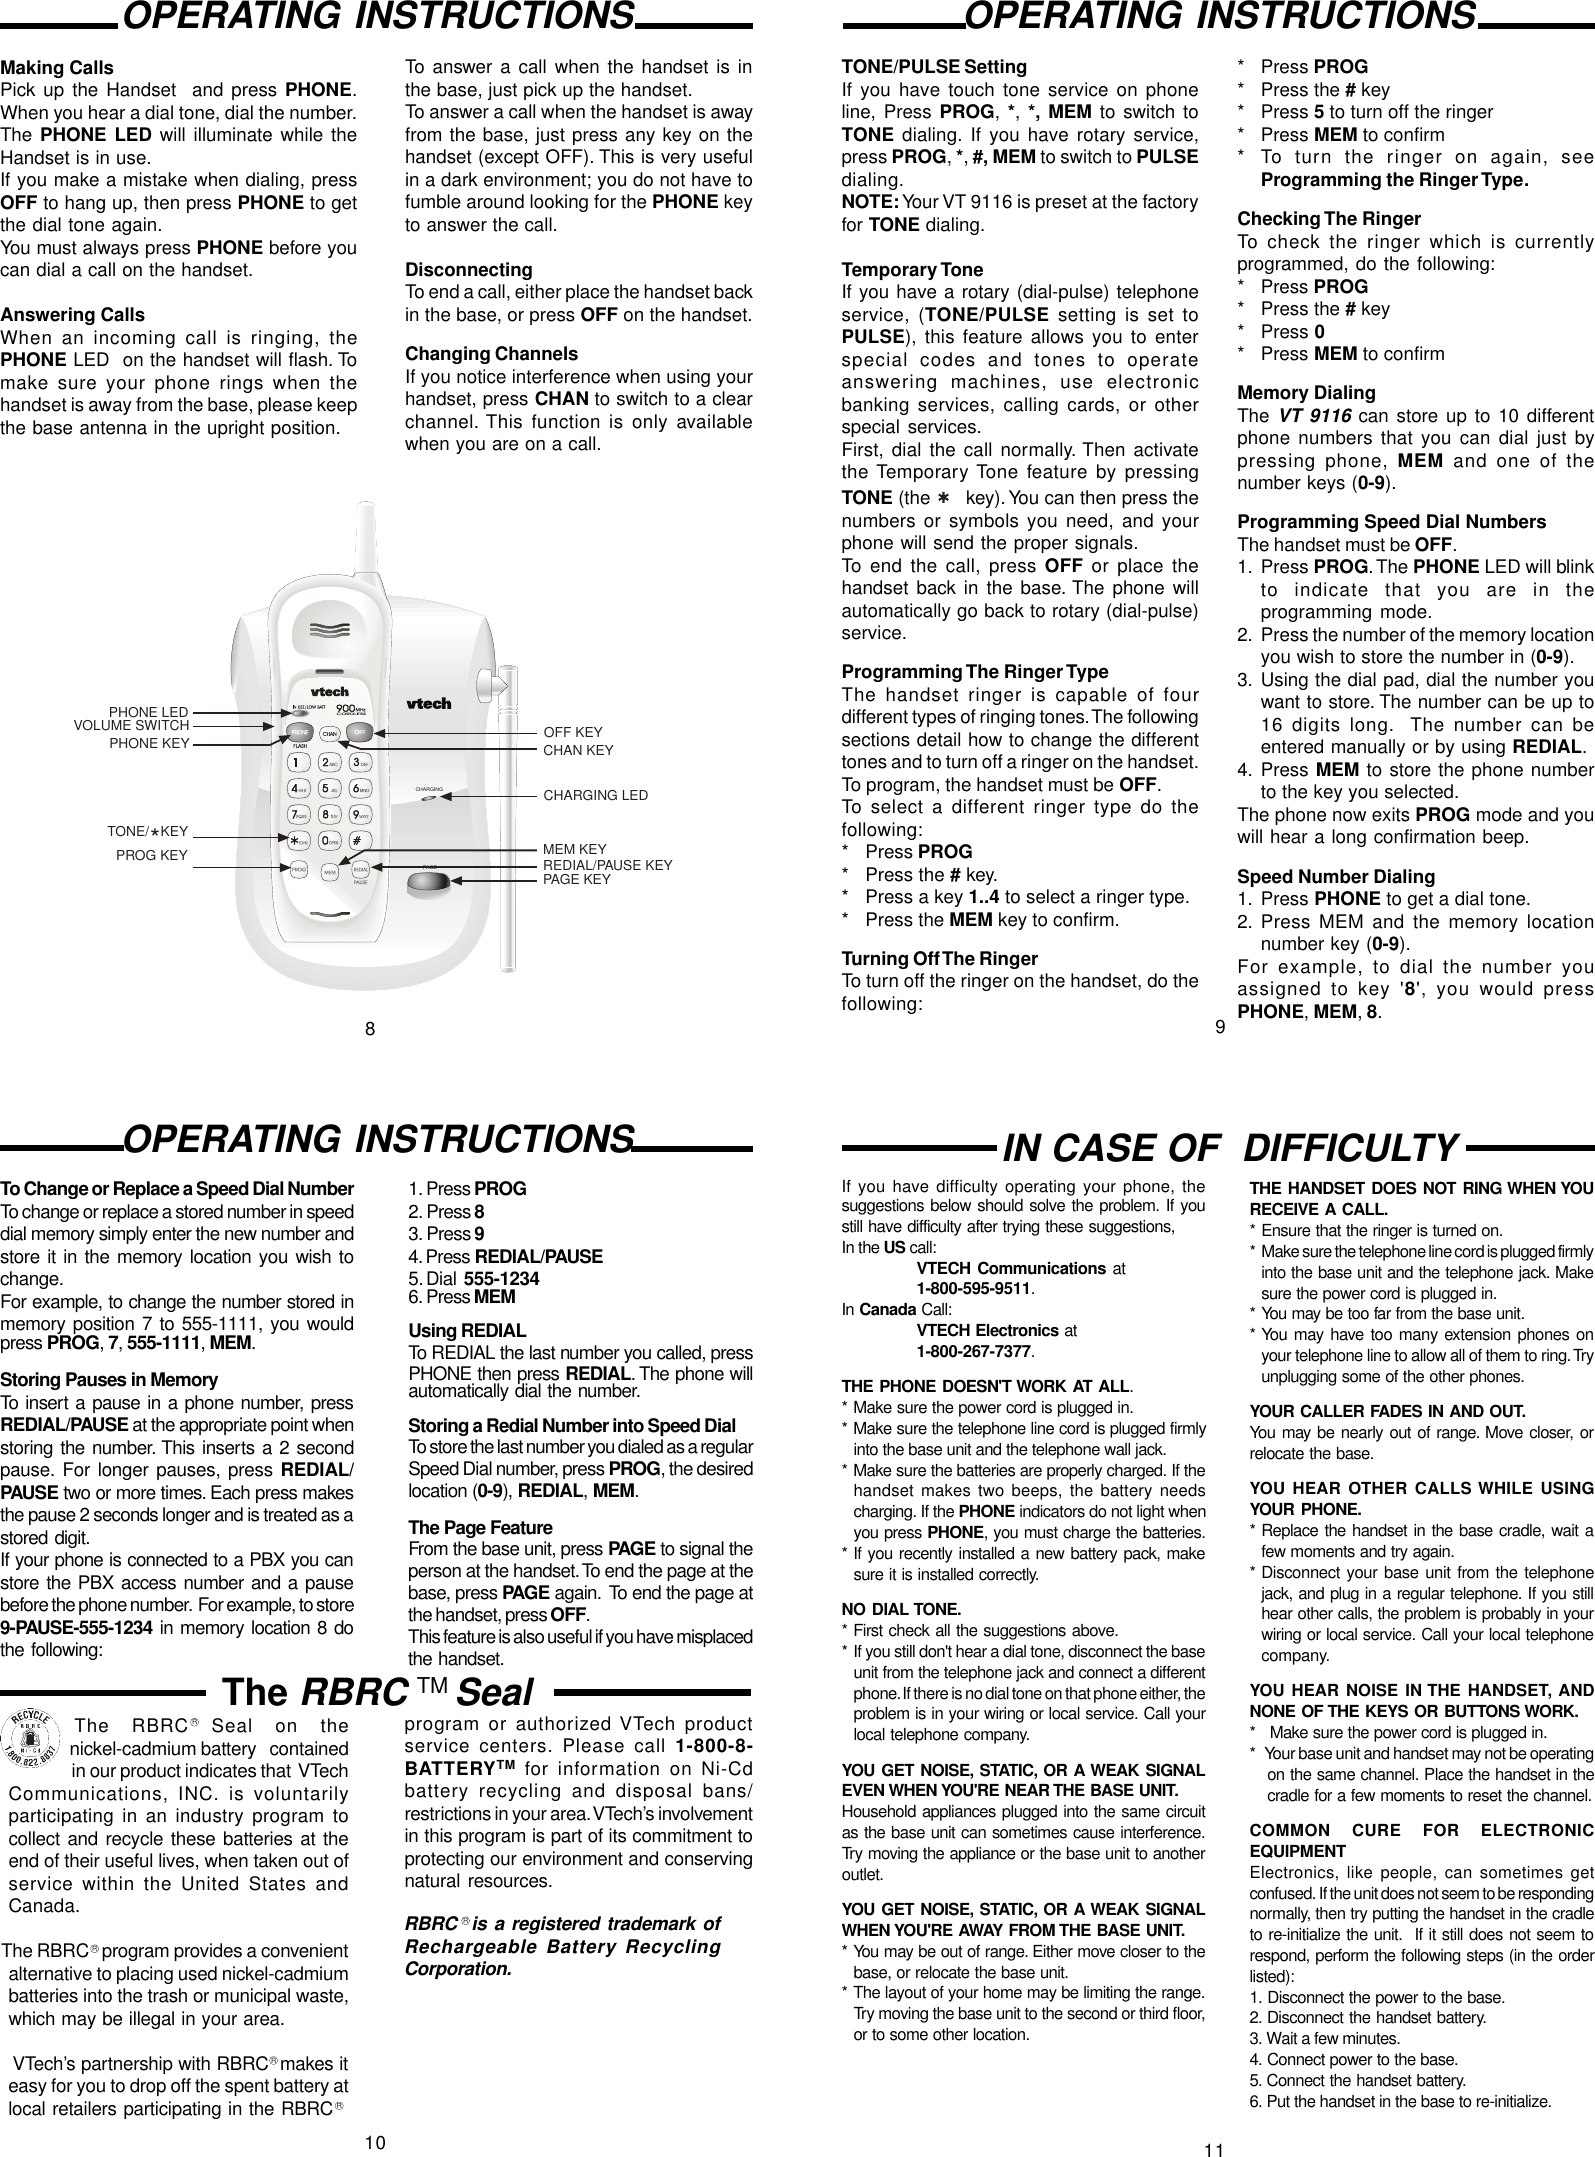 Page 3 of 4 - Vtech Vtech-9116-Users-Manual- U9108MAN  Vtech-9116-users-manual